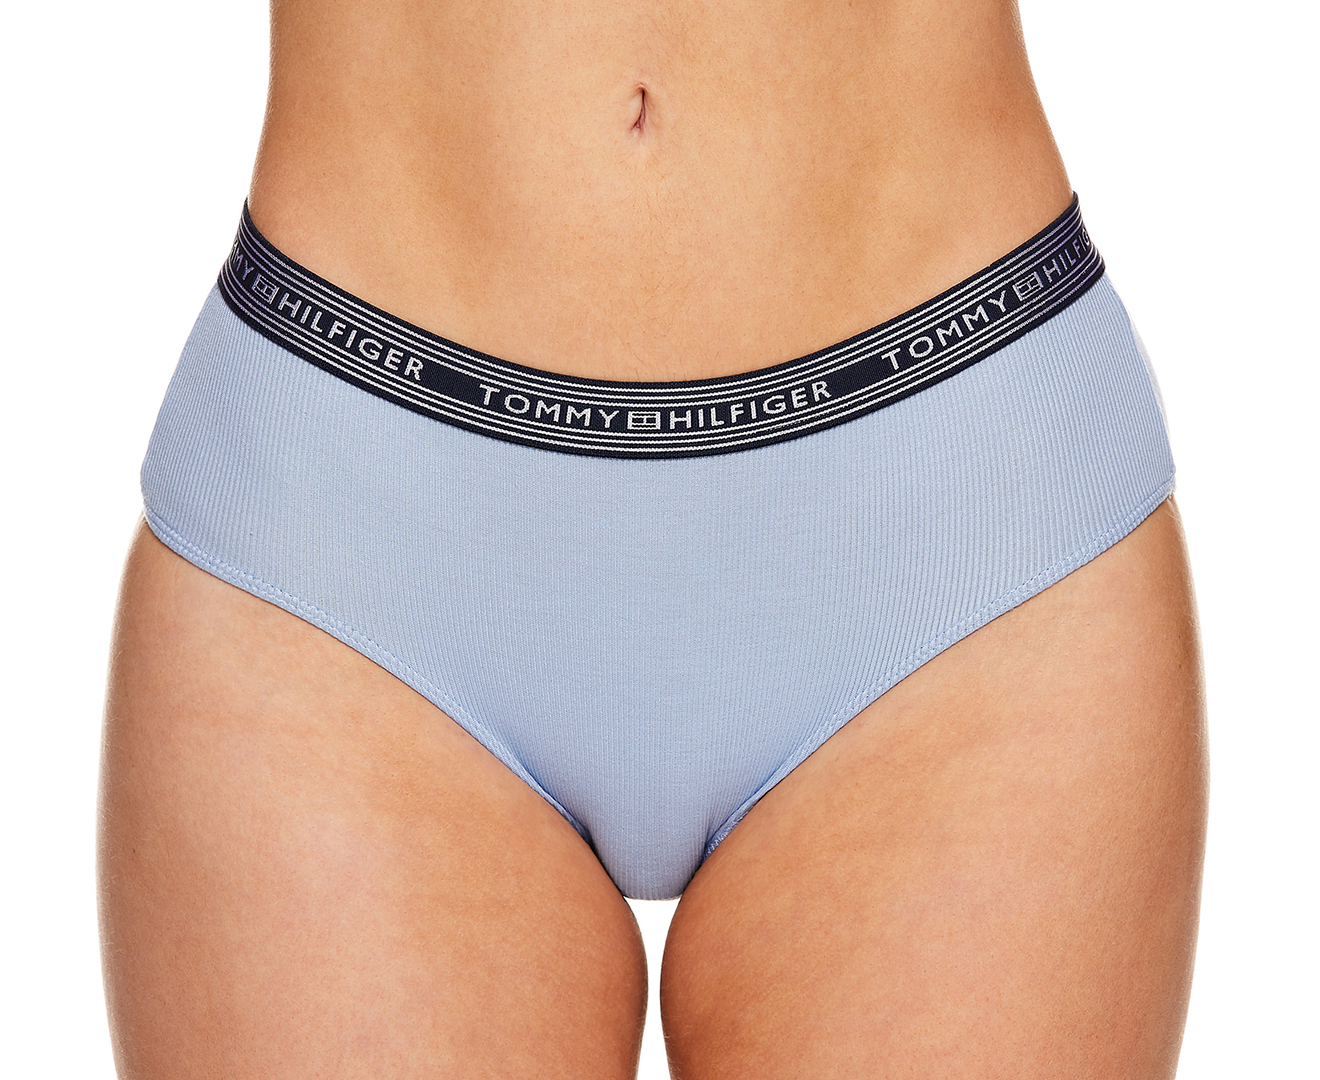 Tommy Hilfiger Womens Hipster-Cut Classic Cotton Underwear